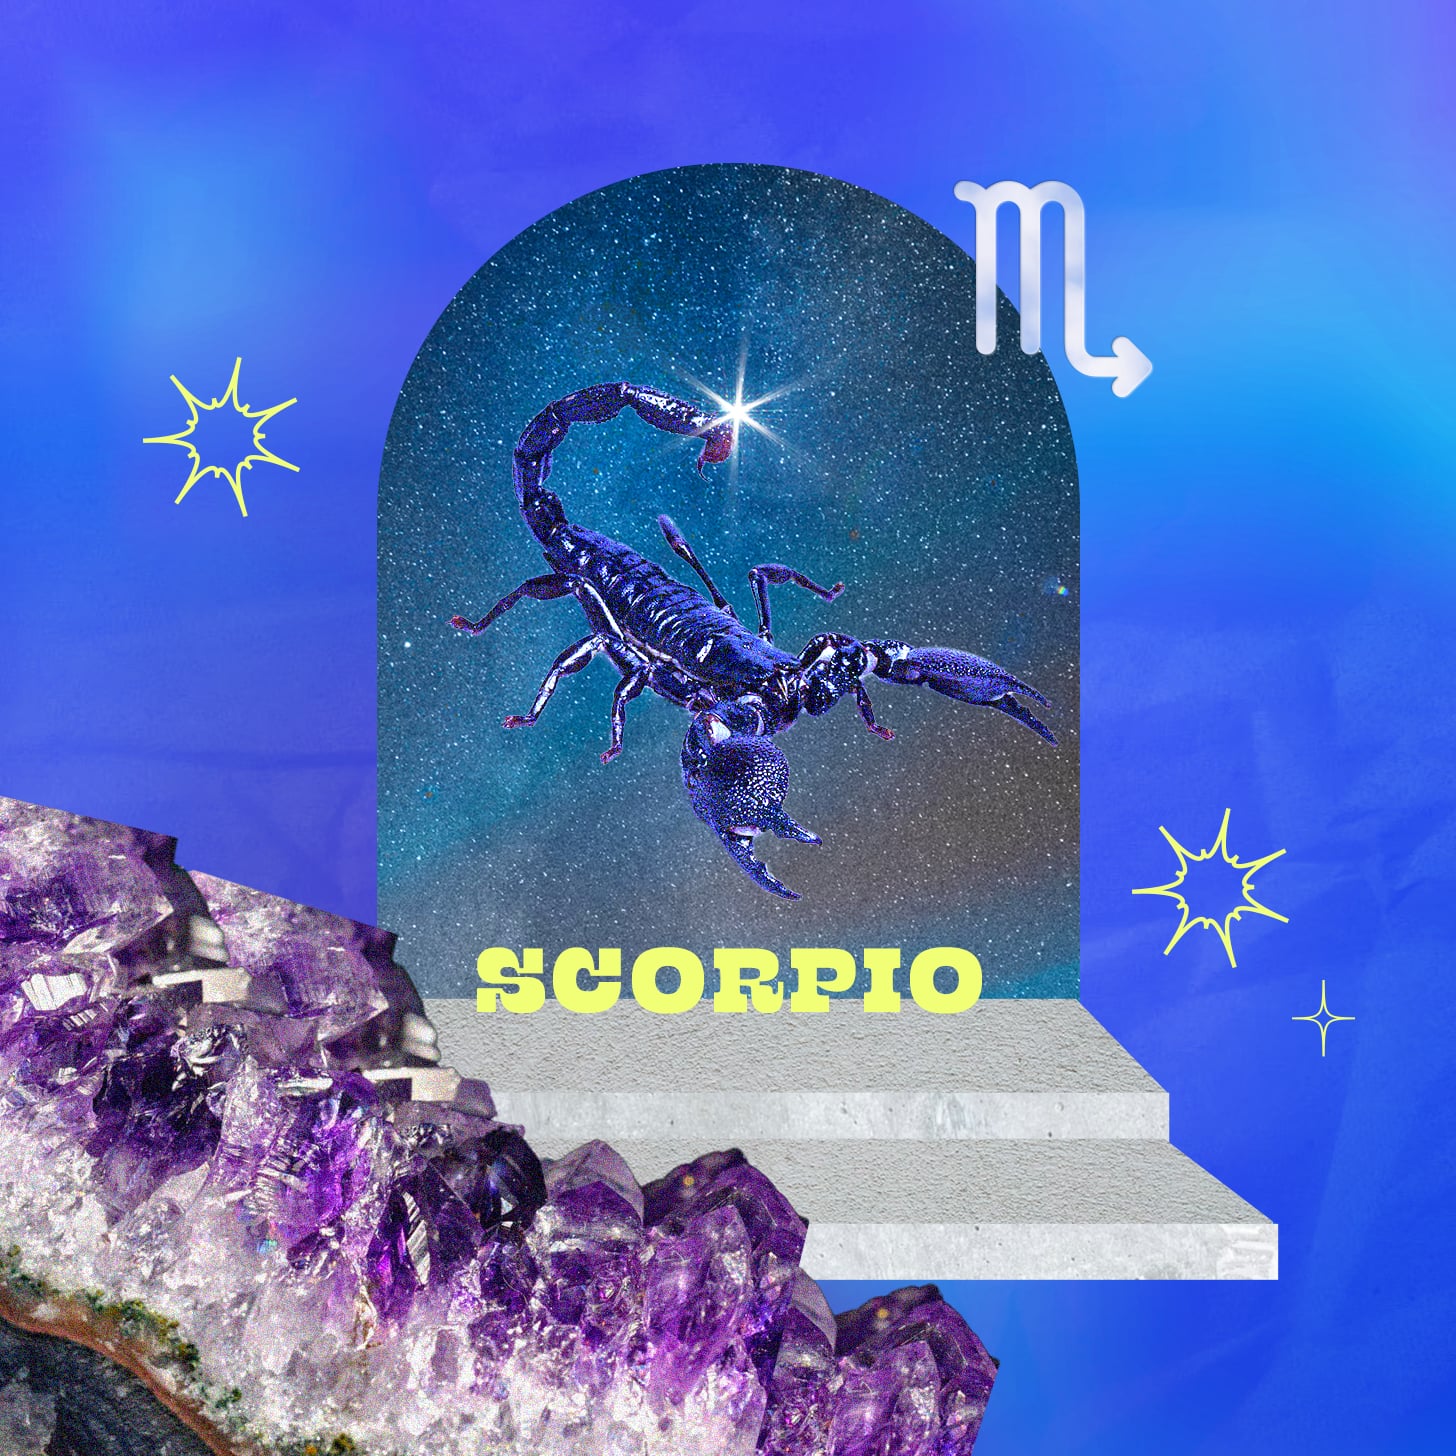 Scorpio weekly horoscope for August 7-13, 2022